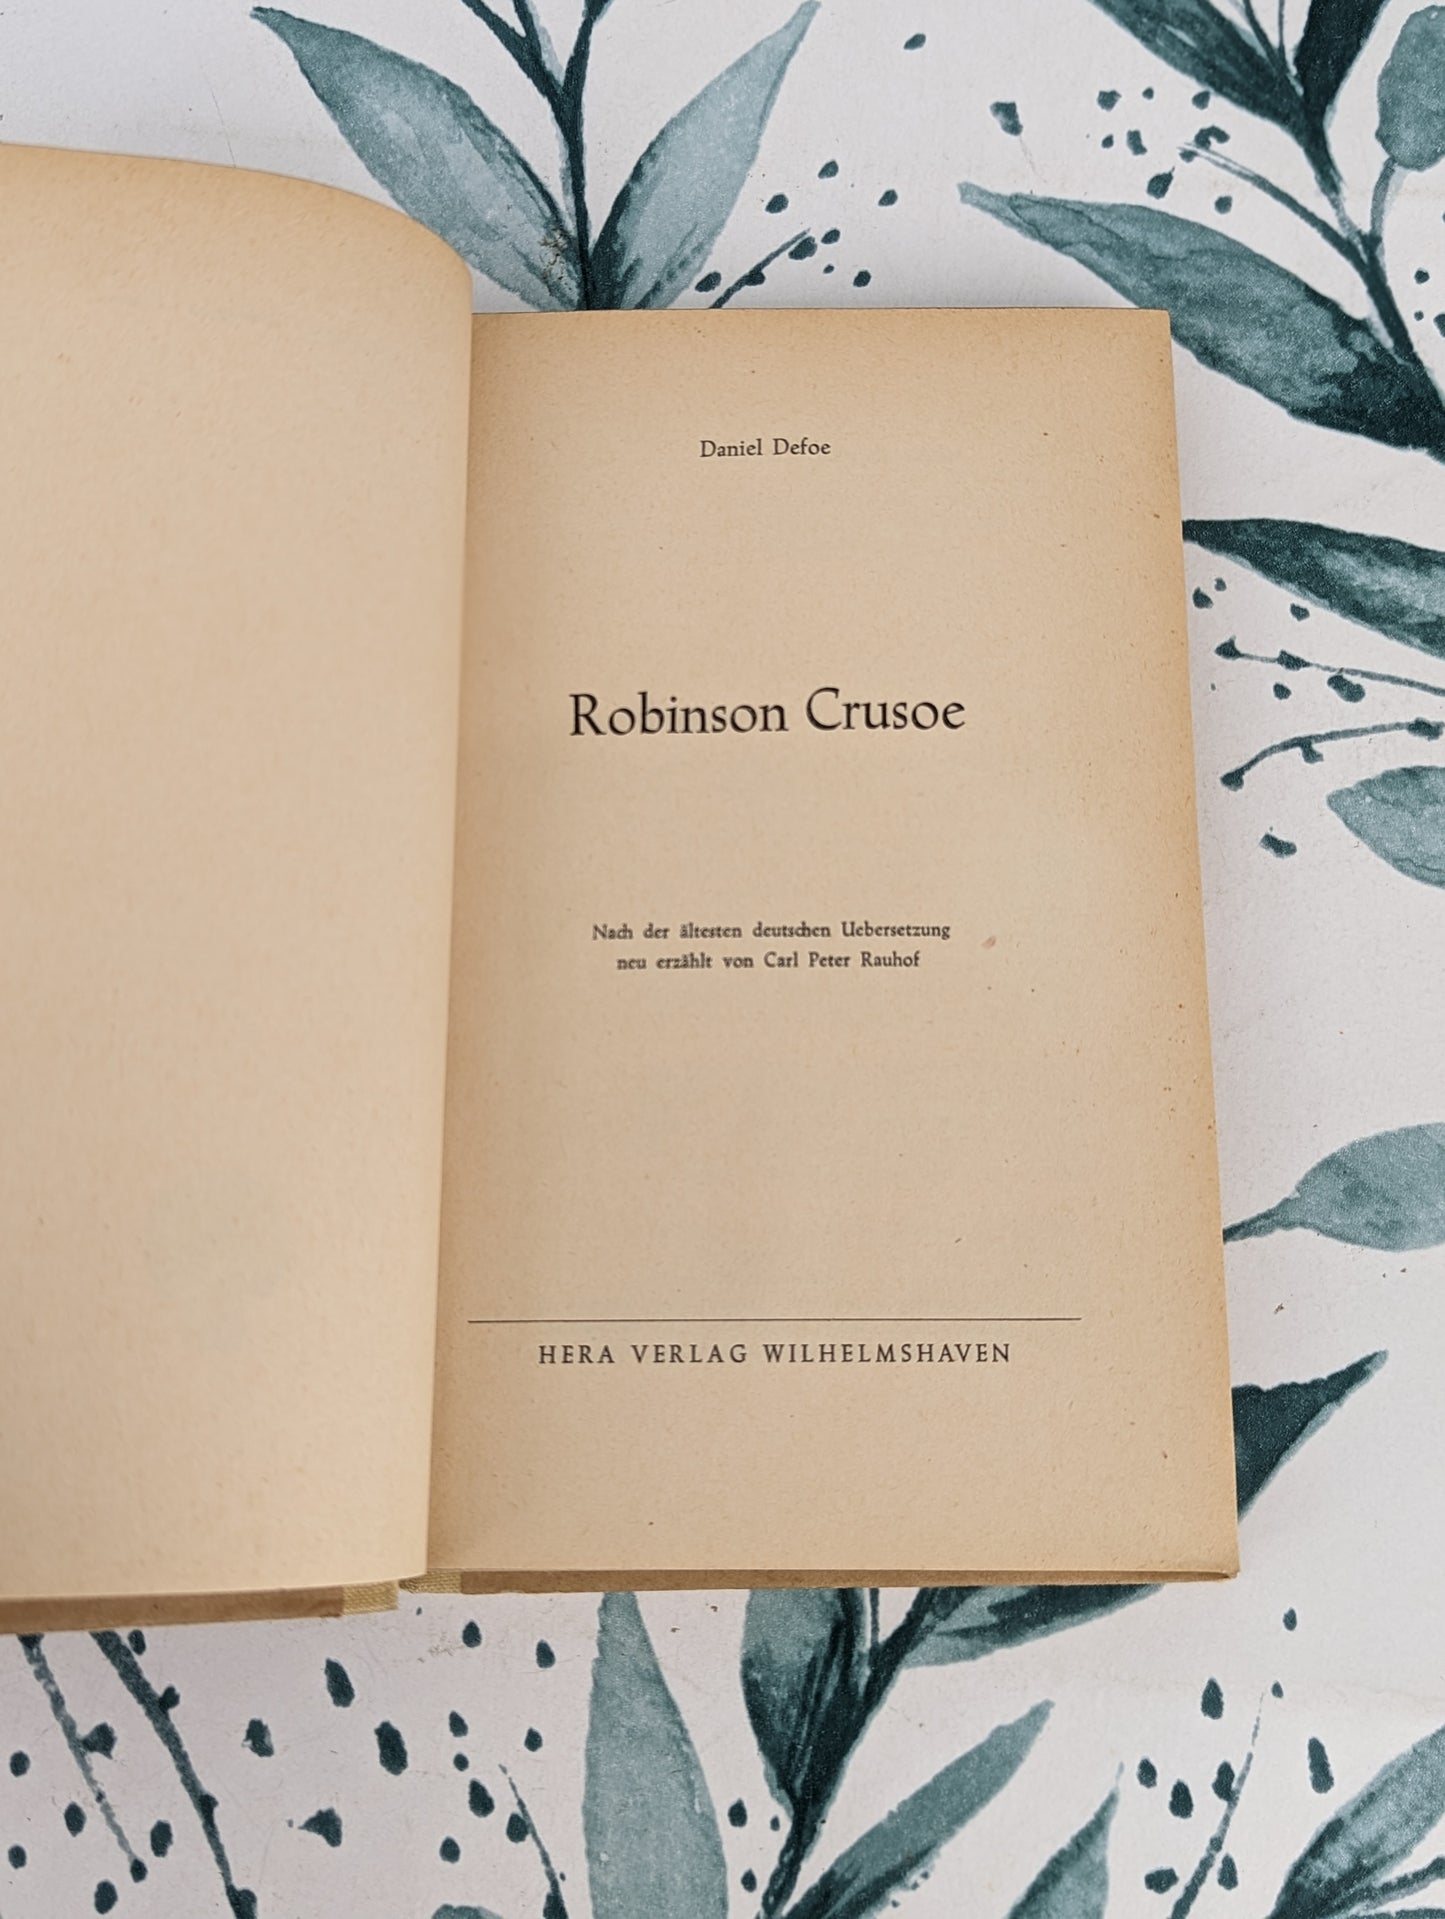 Robinson Crusoe (German edition)